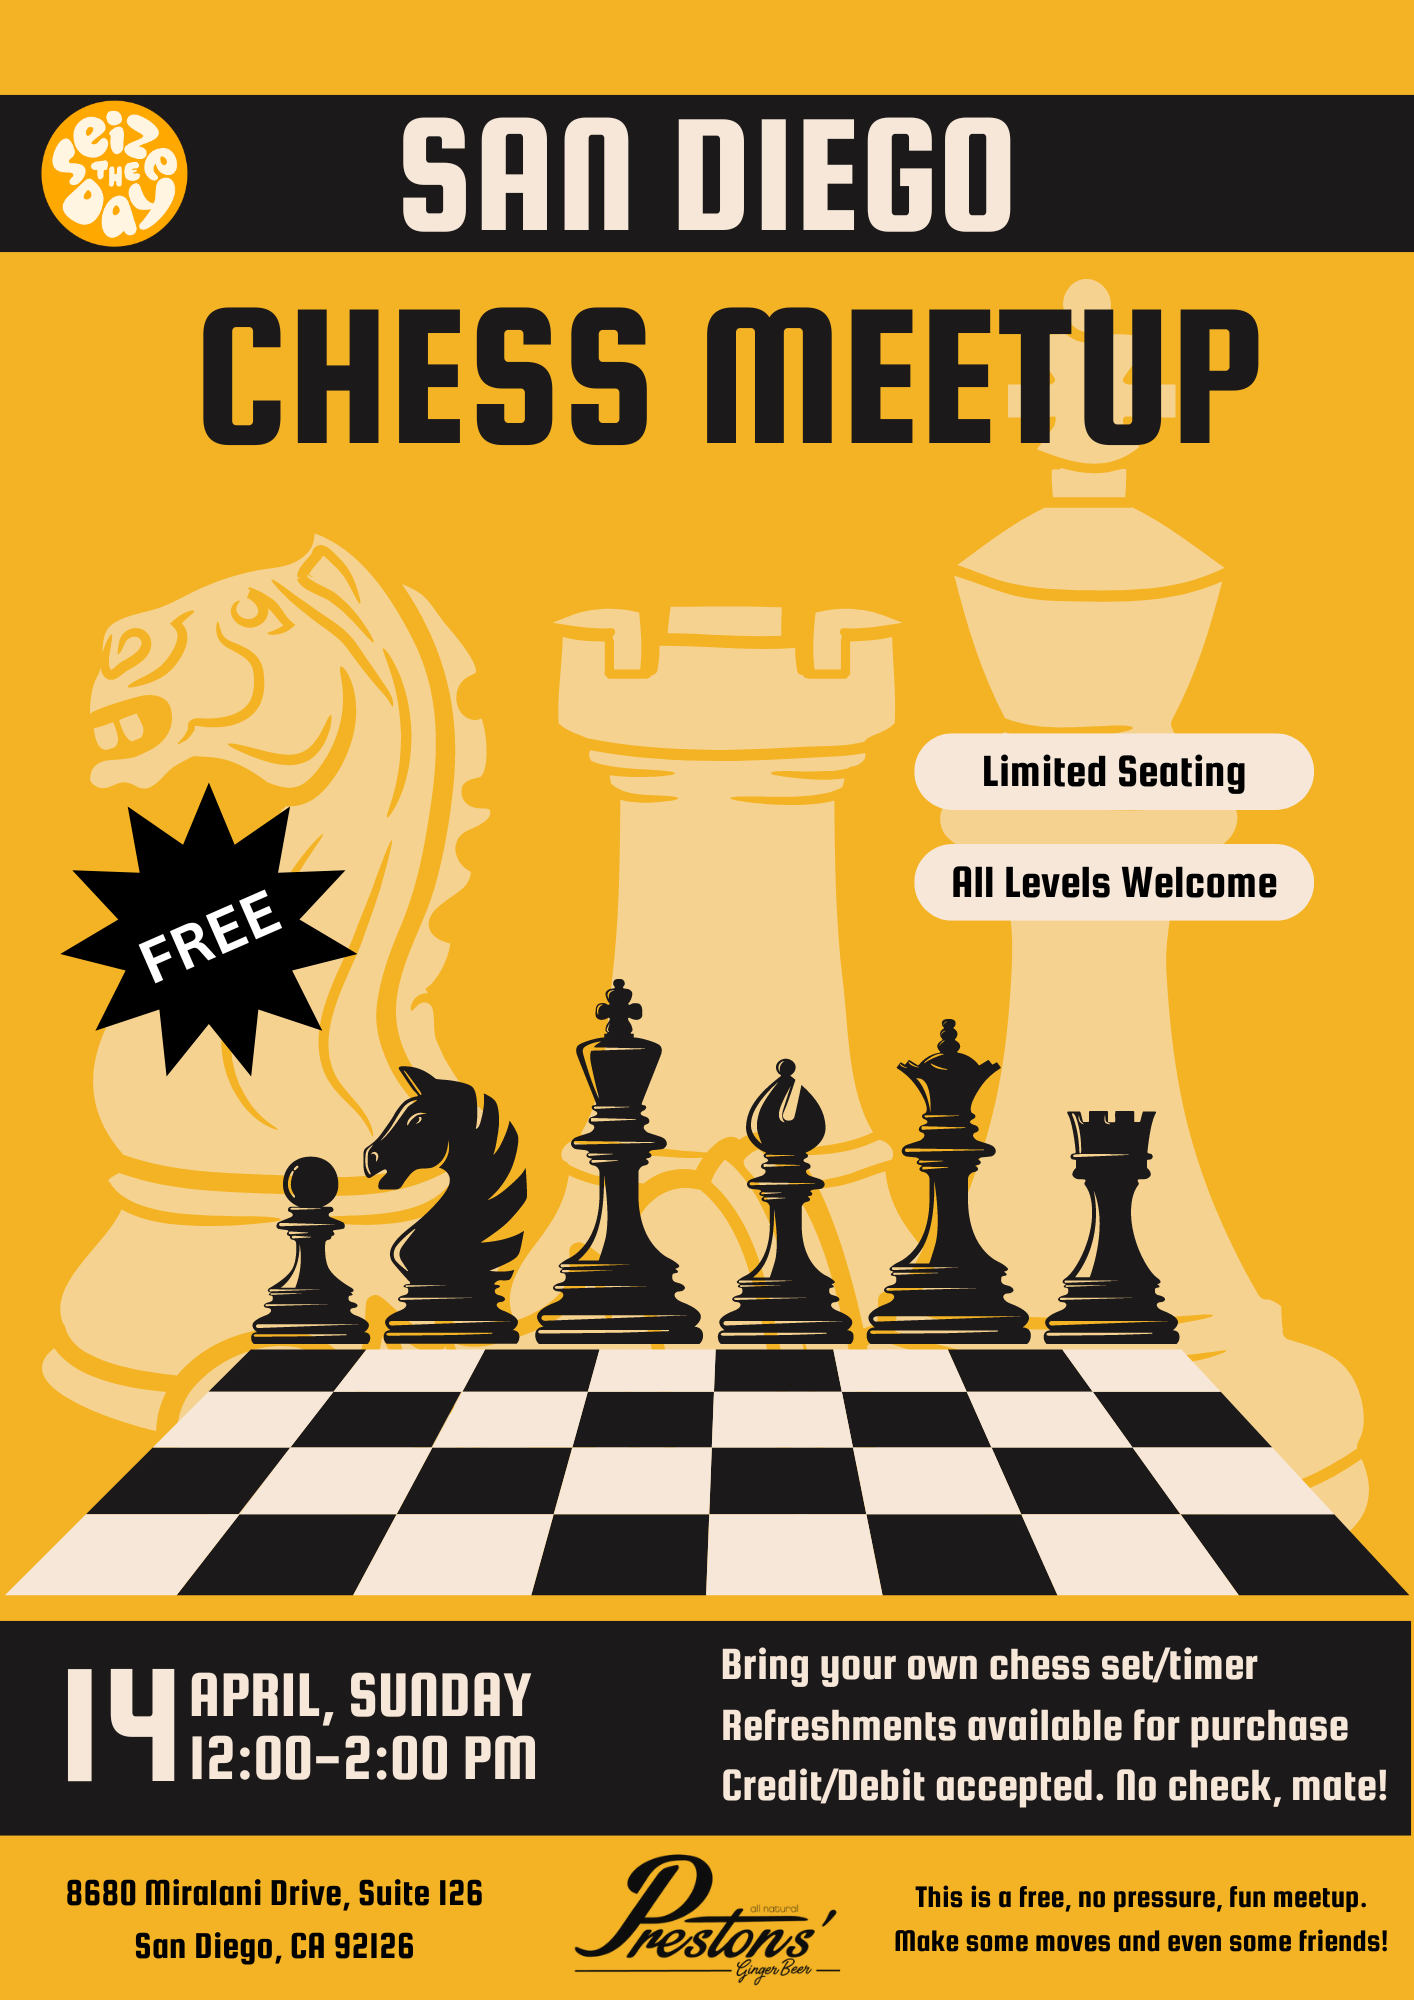 Chess Meet Up: Sunday April 14th